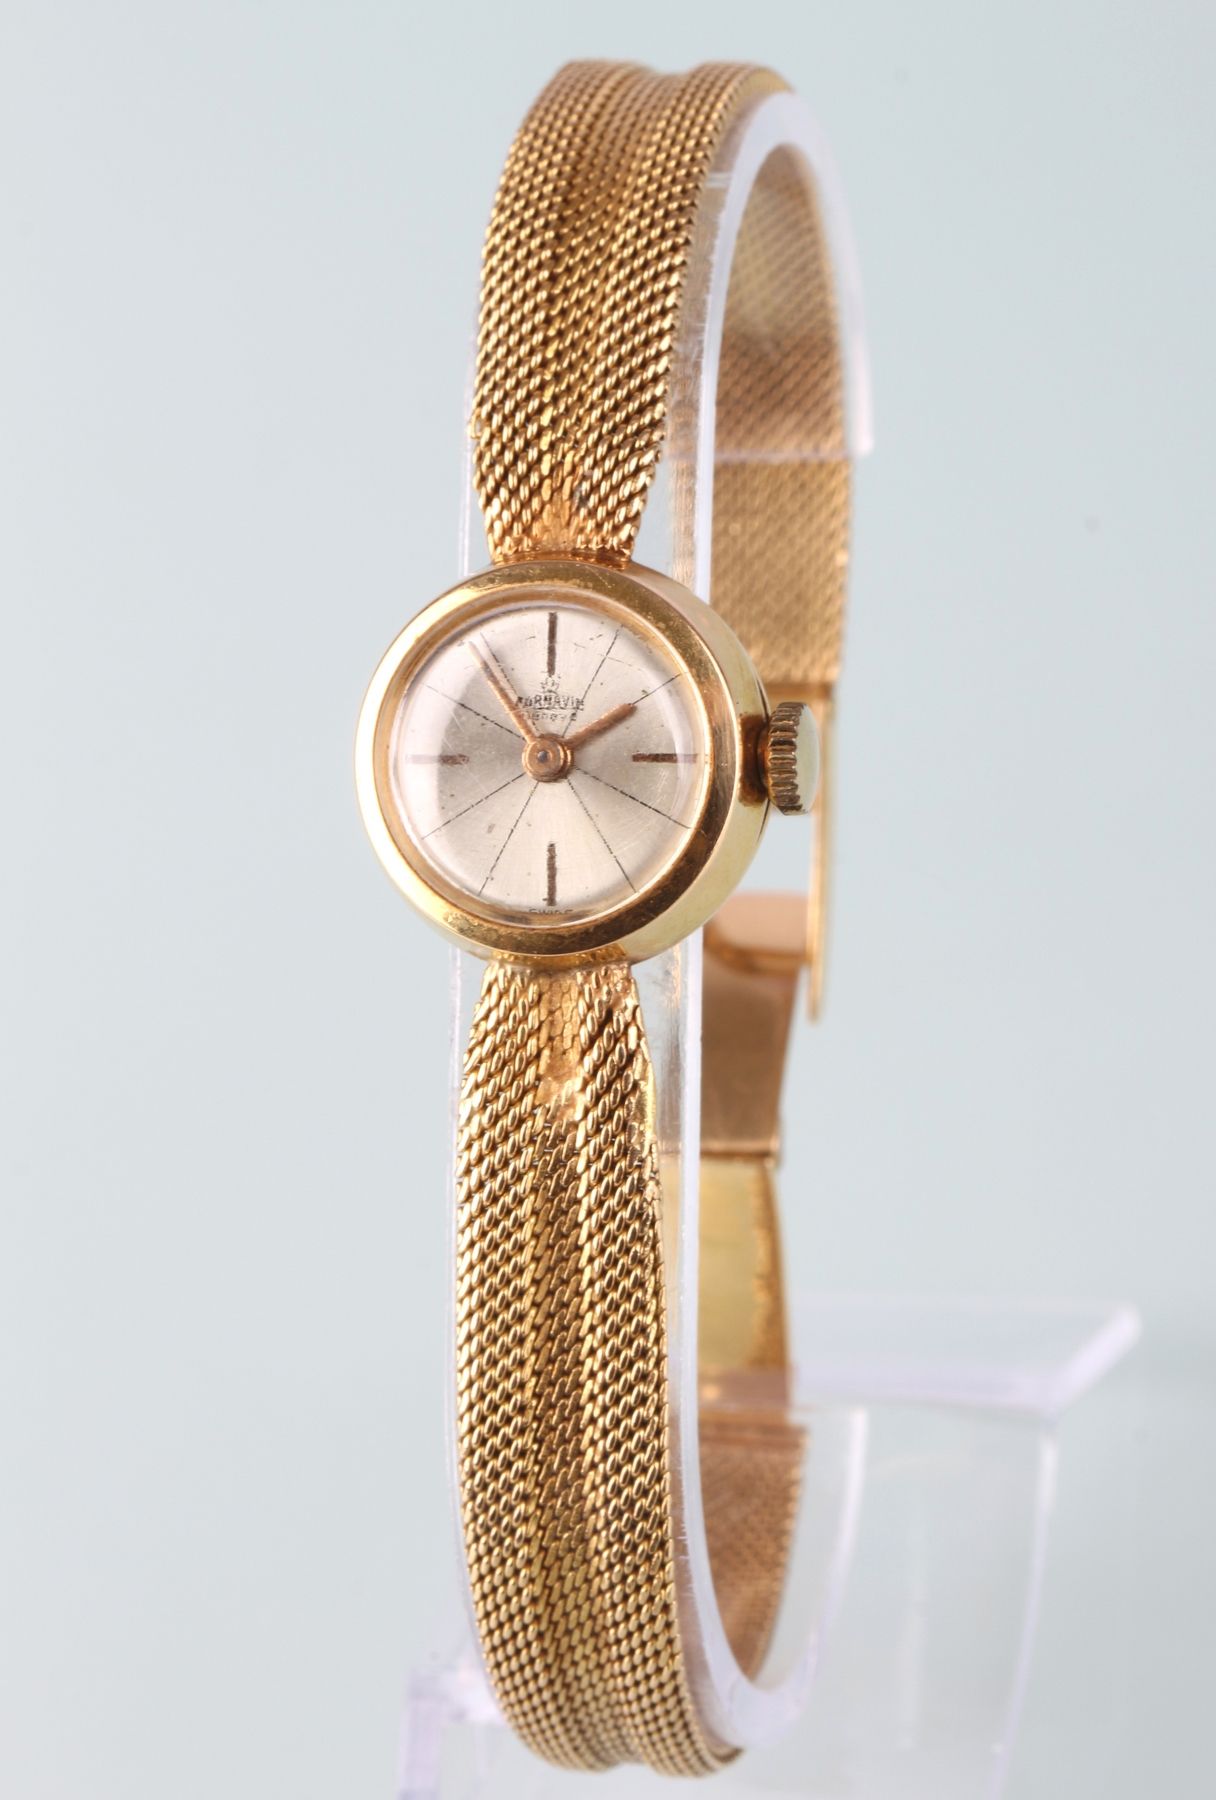 750 Gold Cornavin Geneve Armbanduhr, 18K gold wristwatch, Montre-bracelet suisse&hellip;